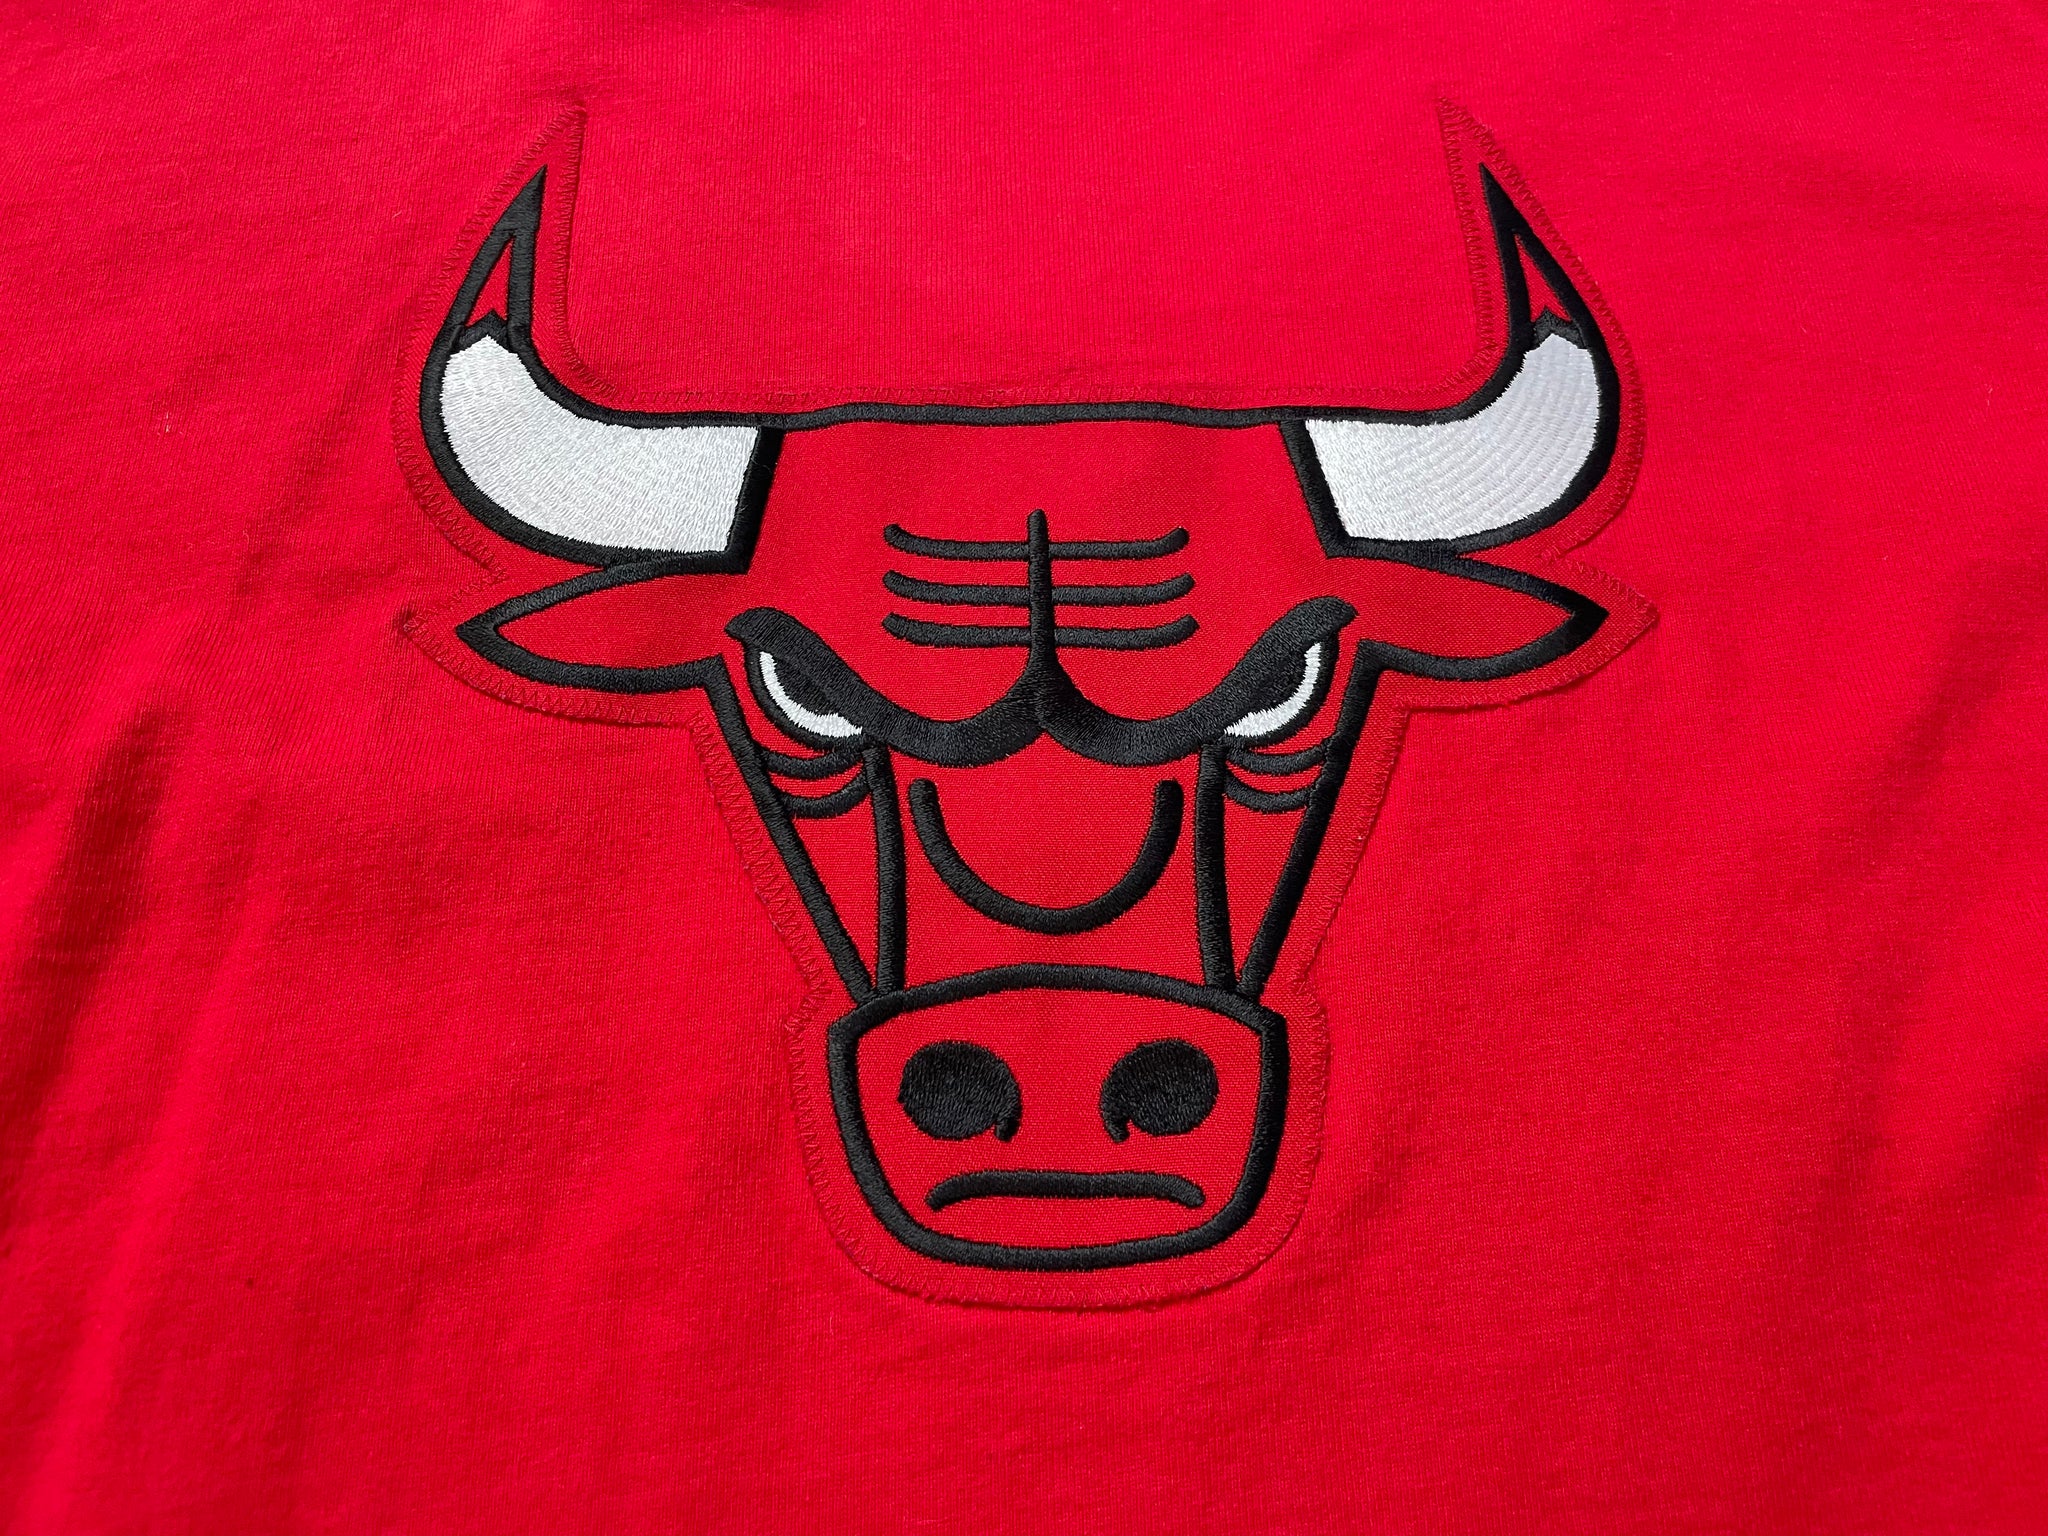 Vintage Chicago Bulls Champion Shooting Shirt Basketball Jersey, Size Large